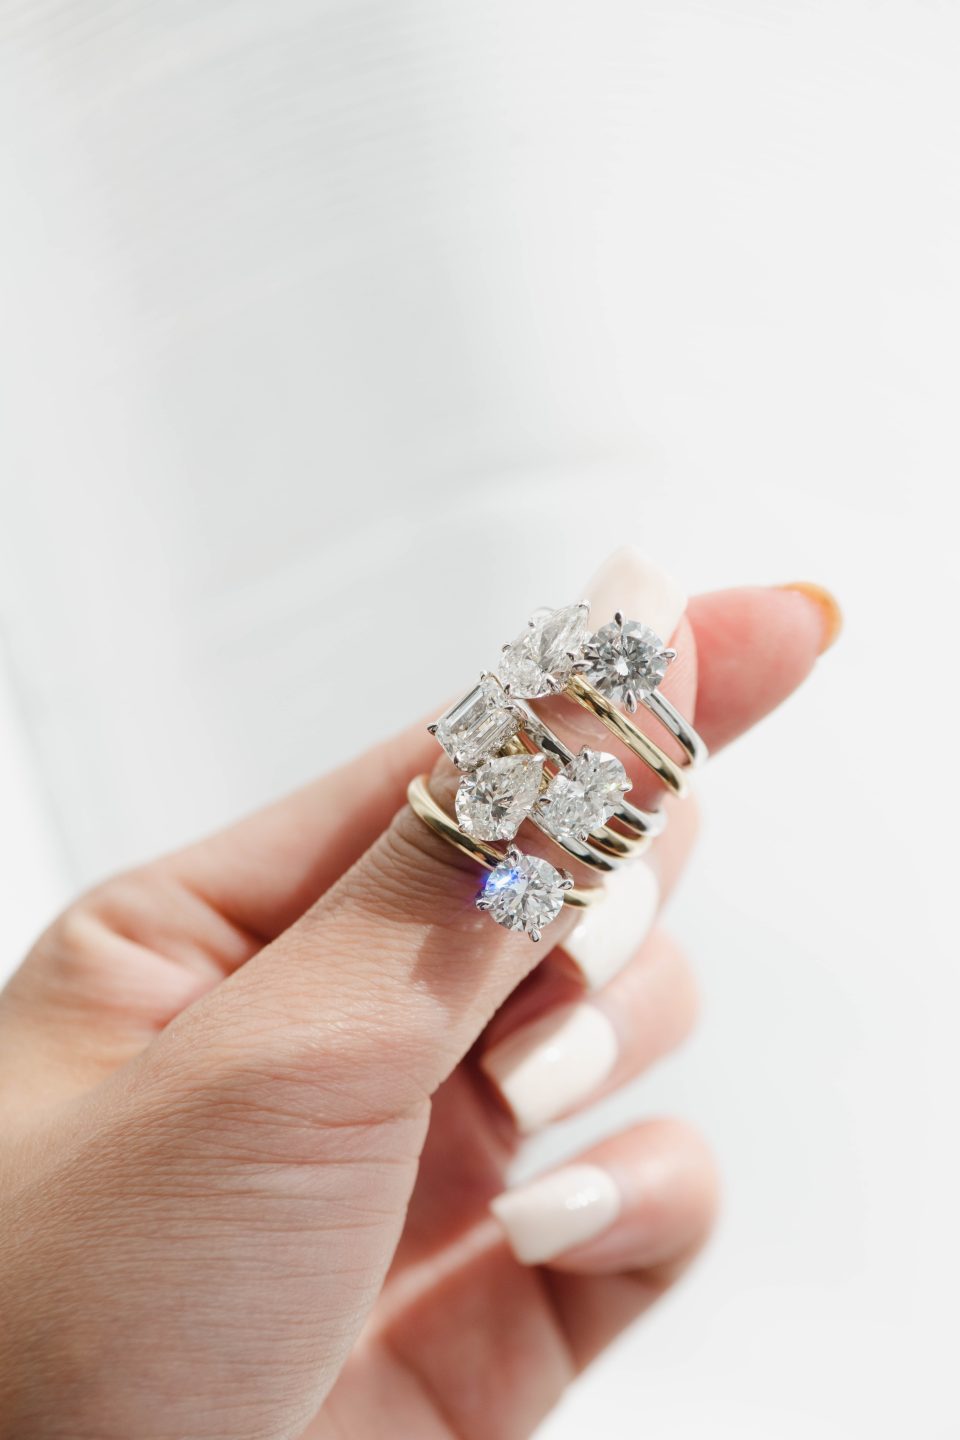 Lab created diamond engagement rings